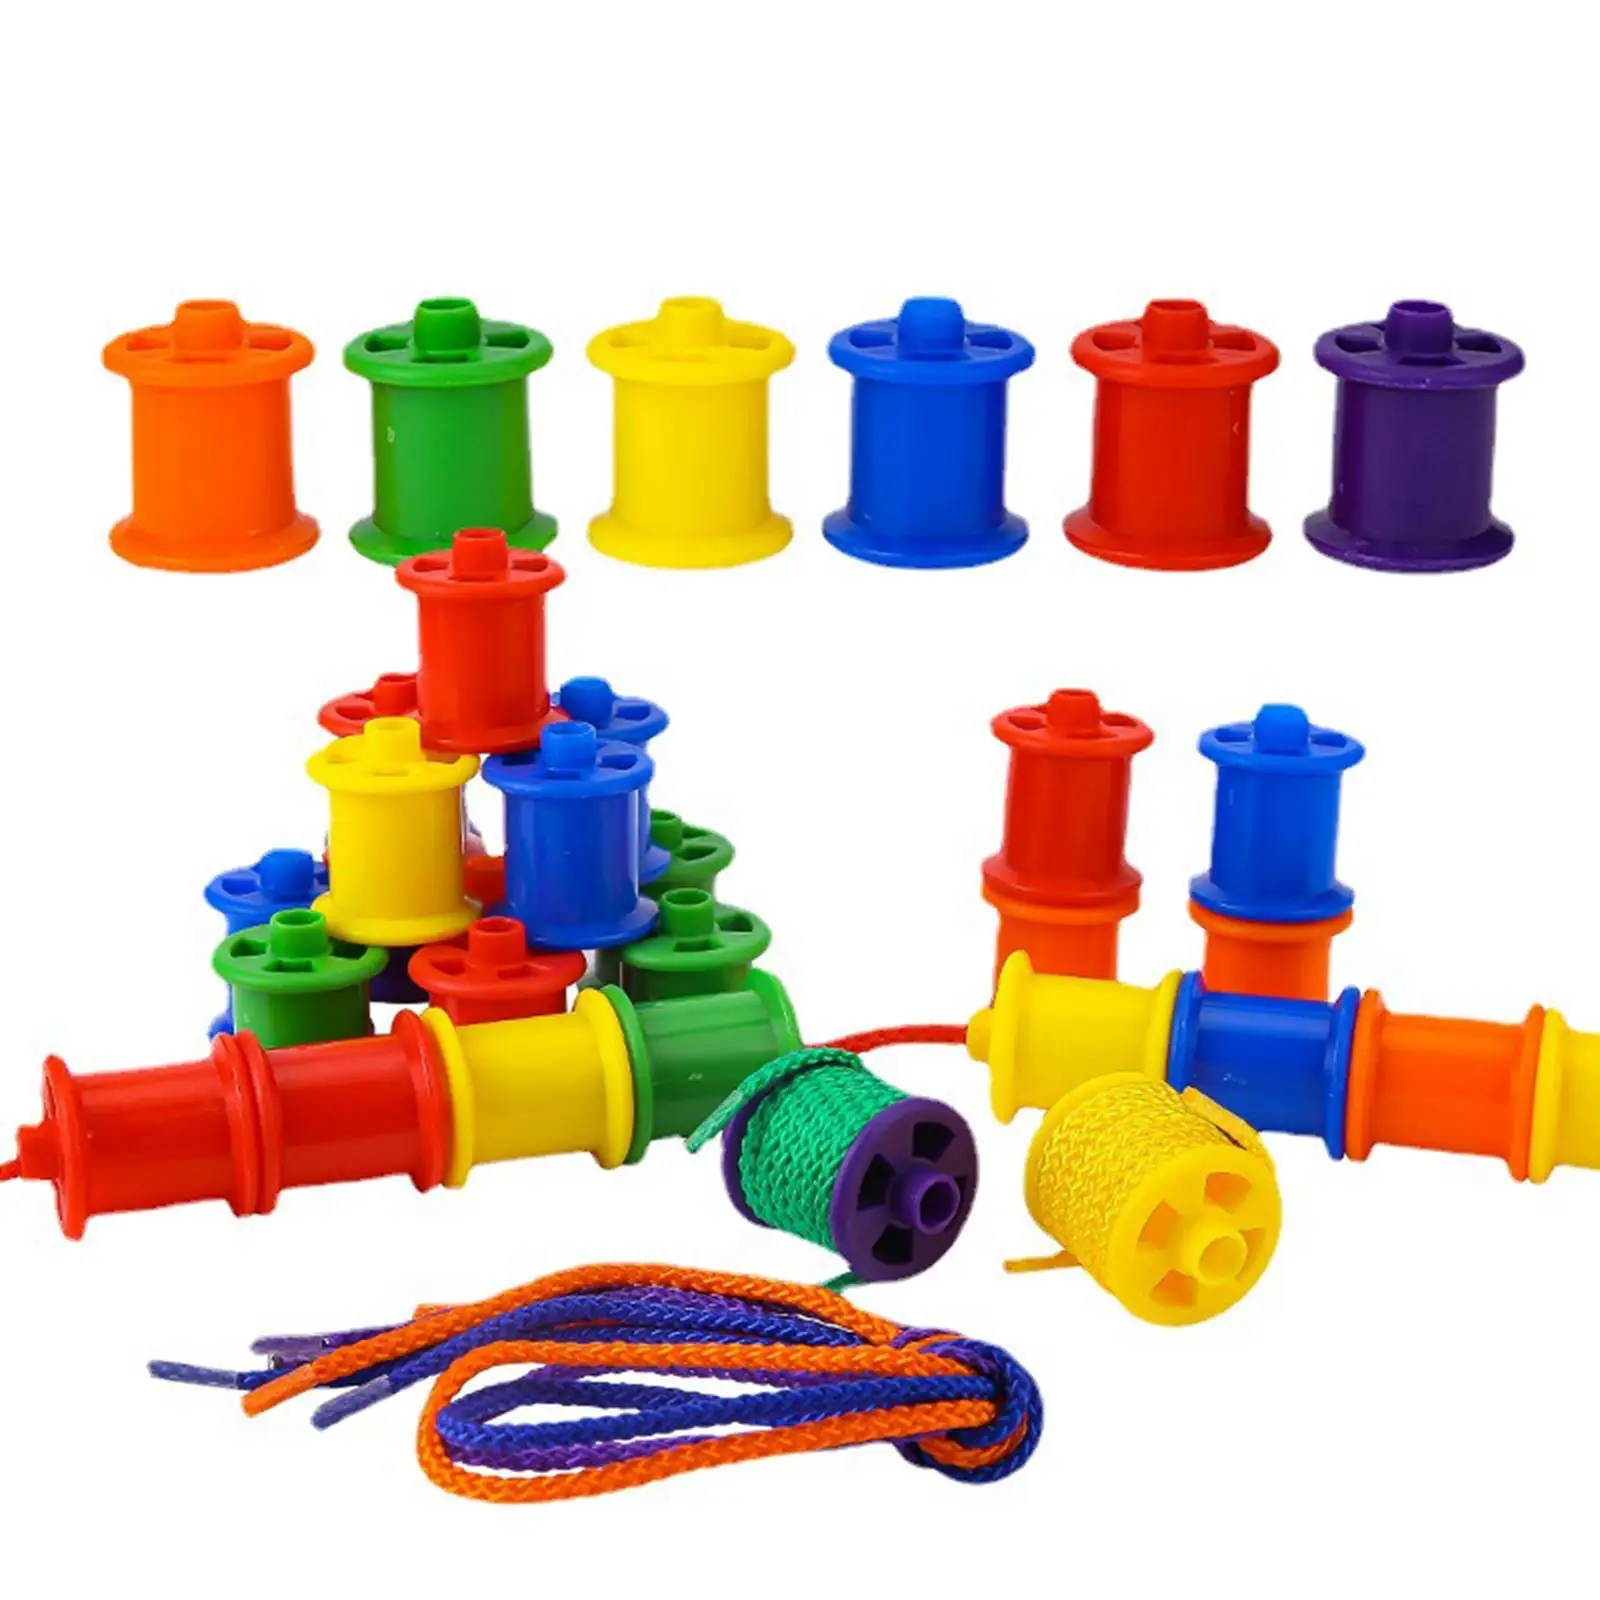 Beaded Blocks Developmental Toys Threading Beads Toy for Nursery Kindergarten